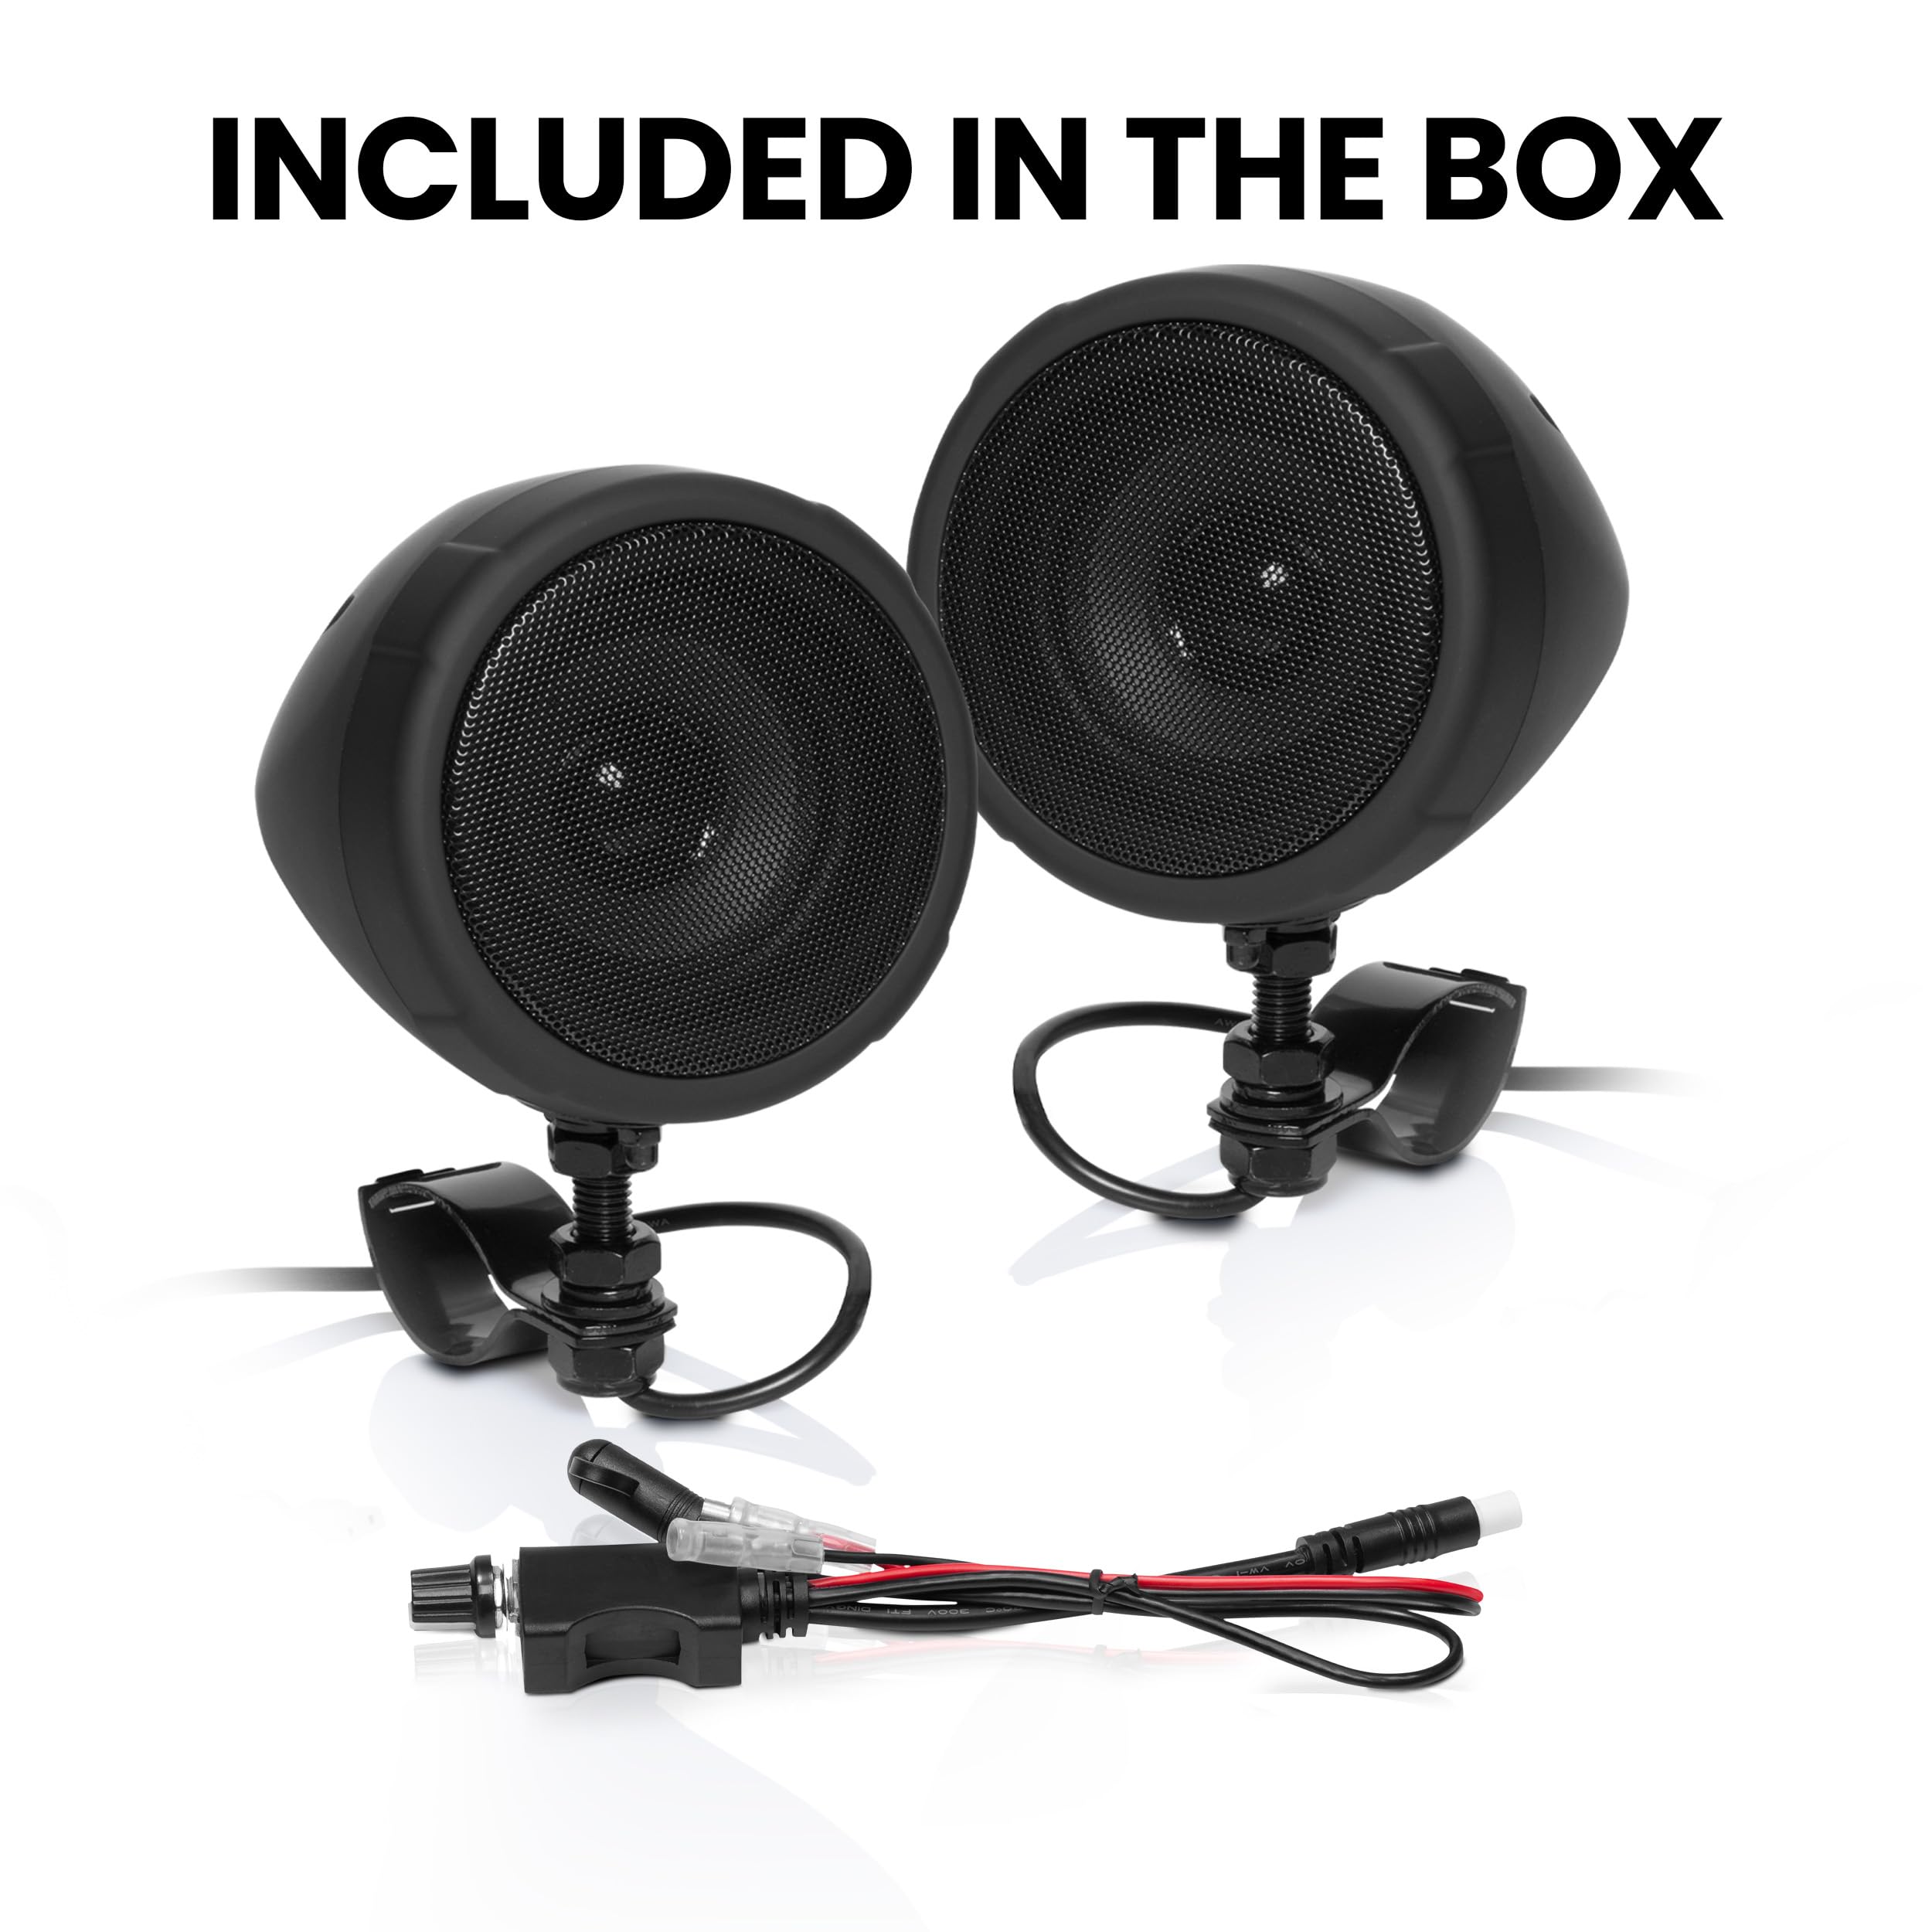 BOSS Audio Systems MCBK425BA 3 Inch Motorcycle Speakers – Built-in Bluetooth Amplifier, Weatherproof, Volume Control, ATV UTV Compatible